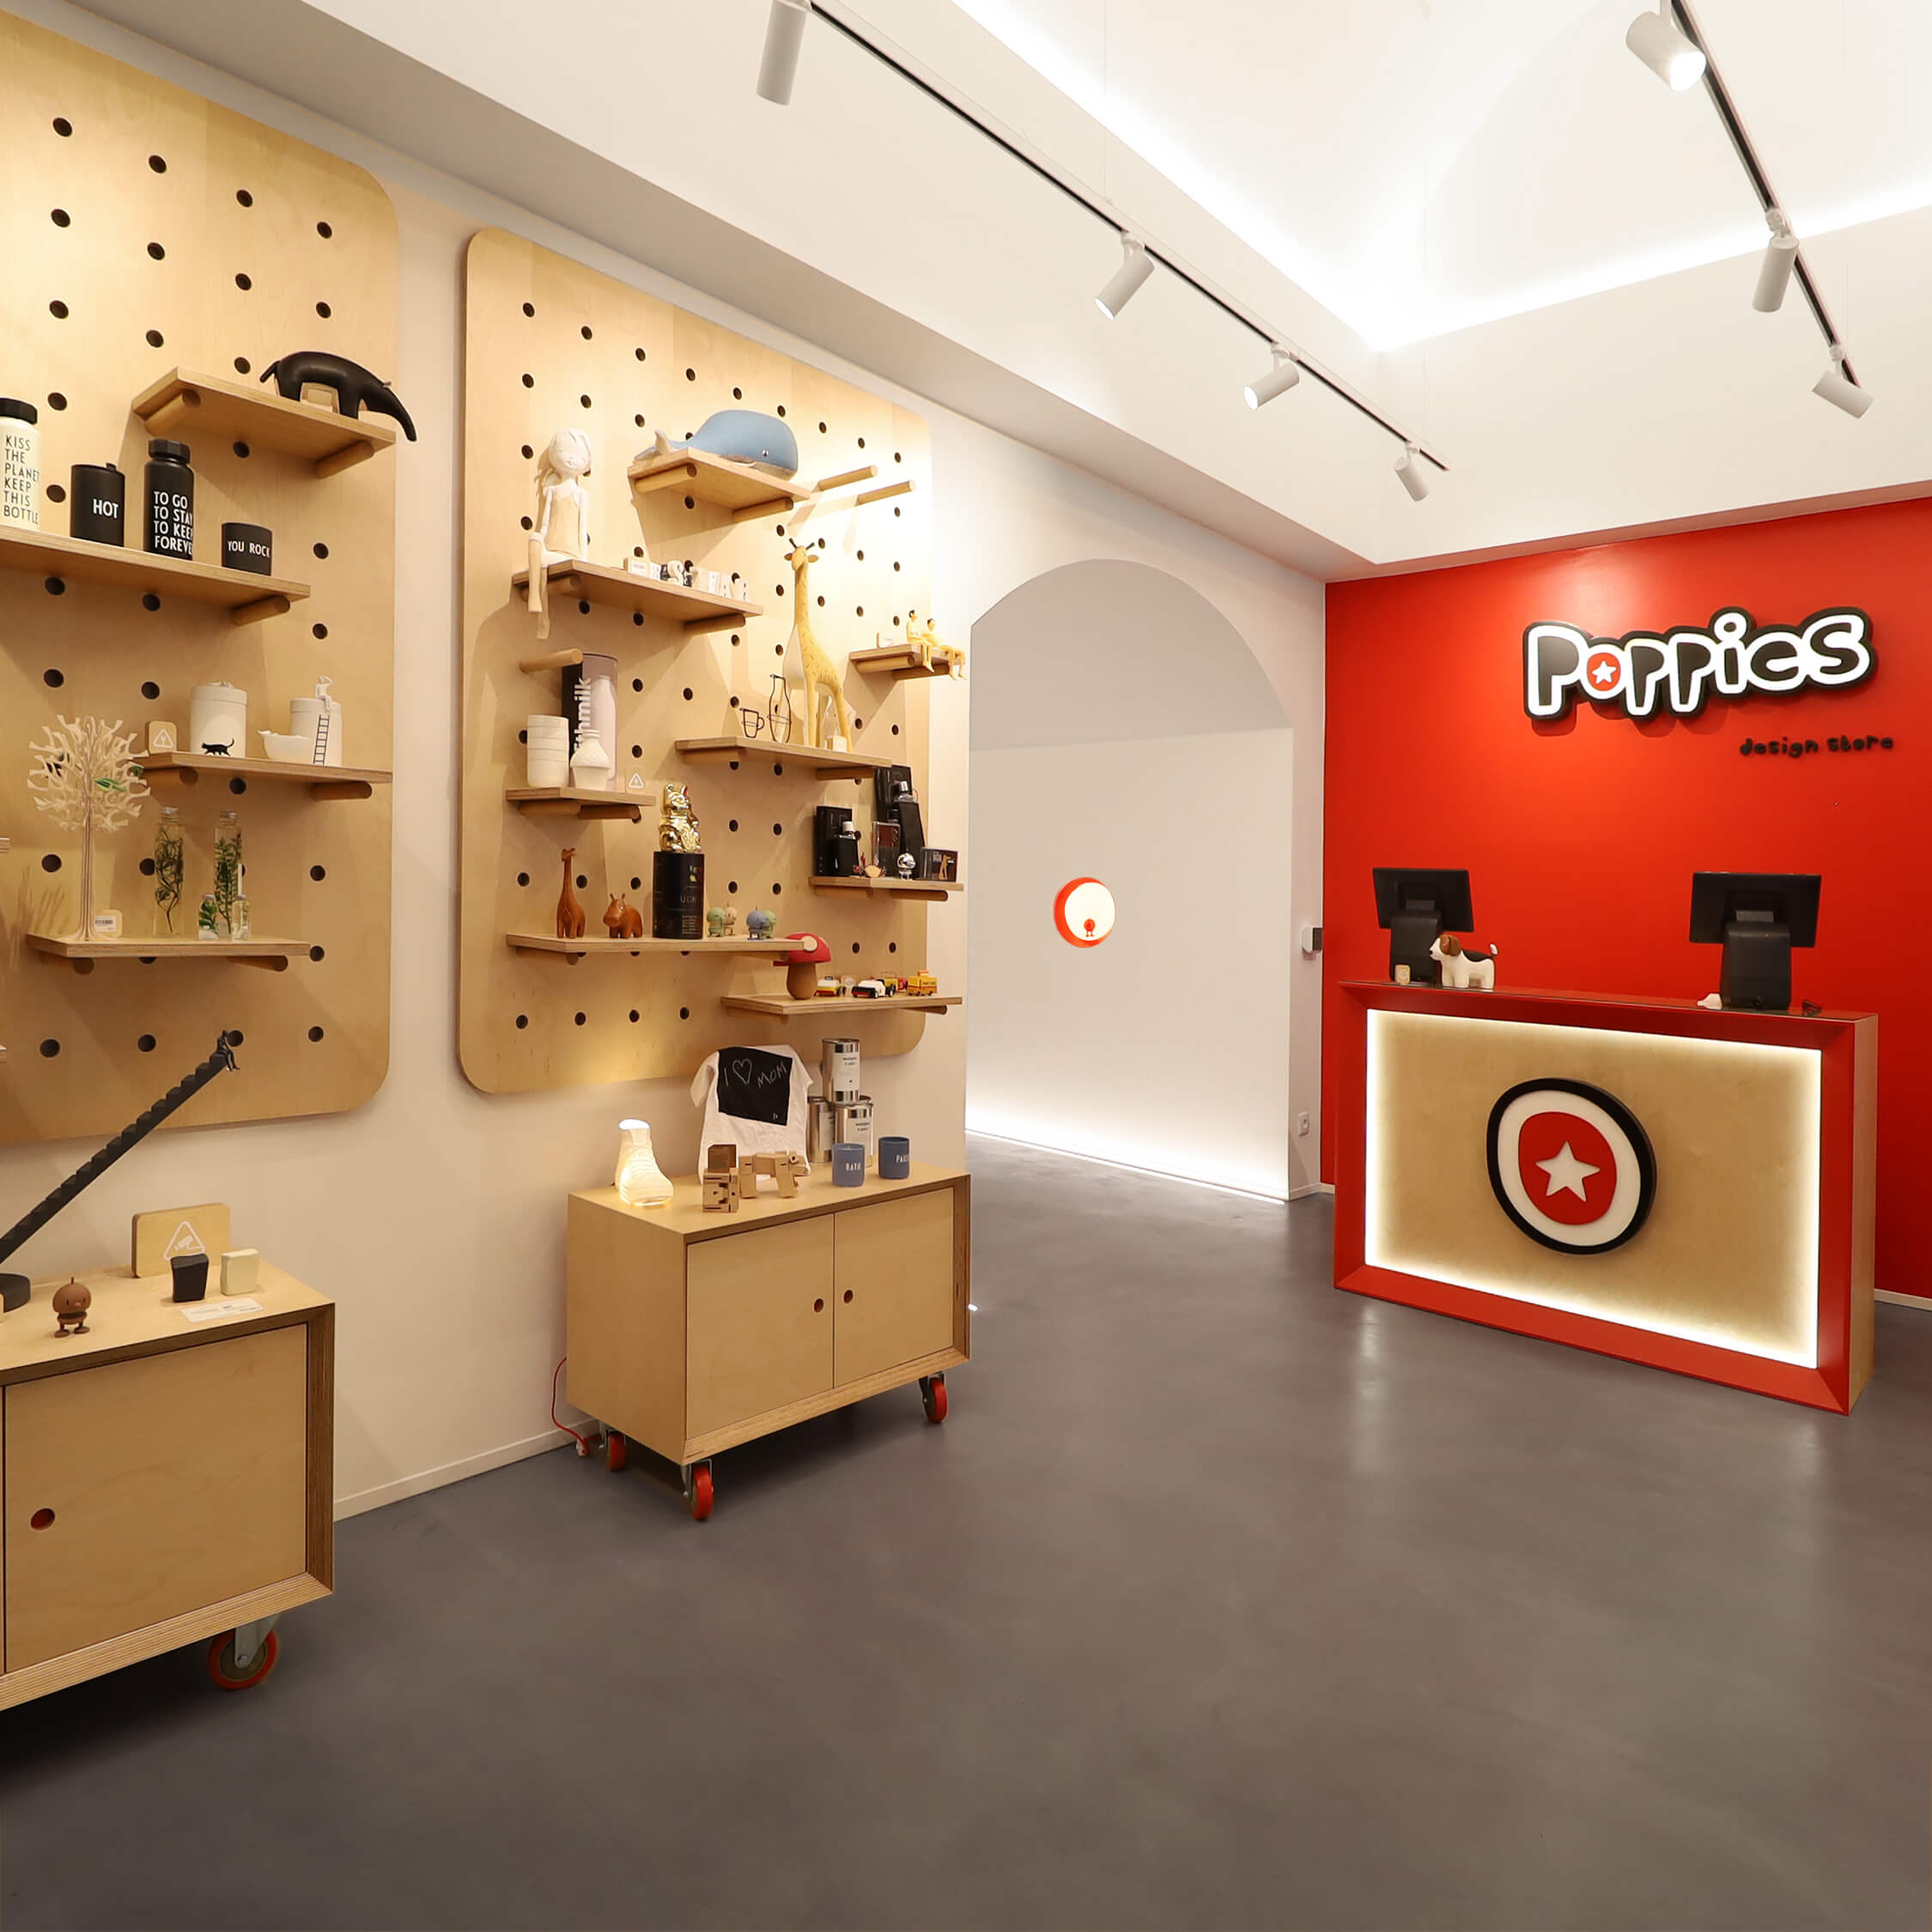 poppies-design-store4